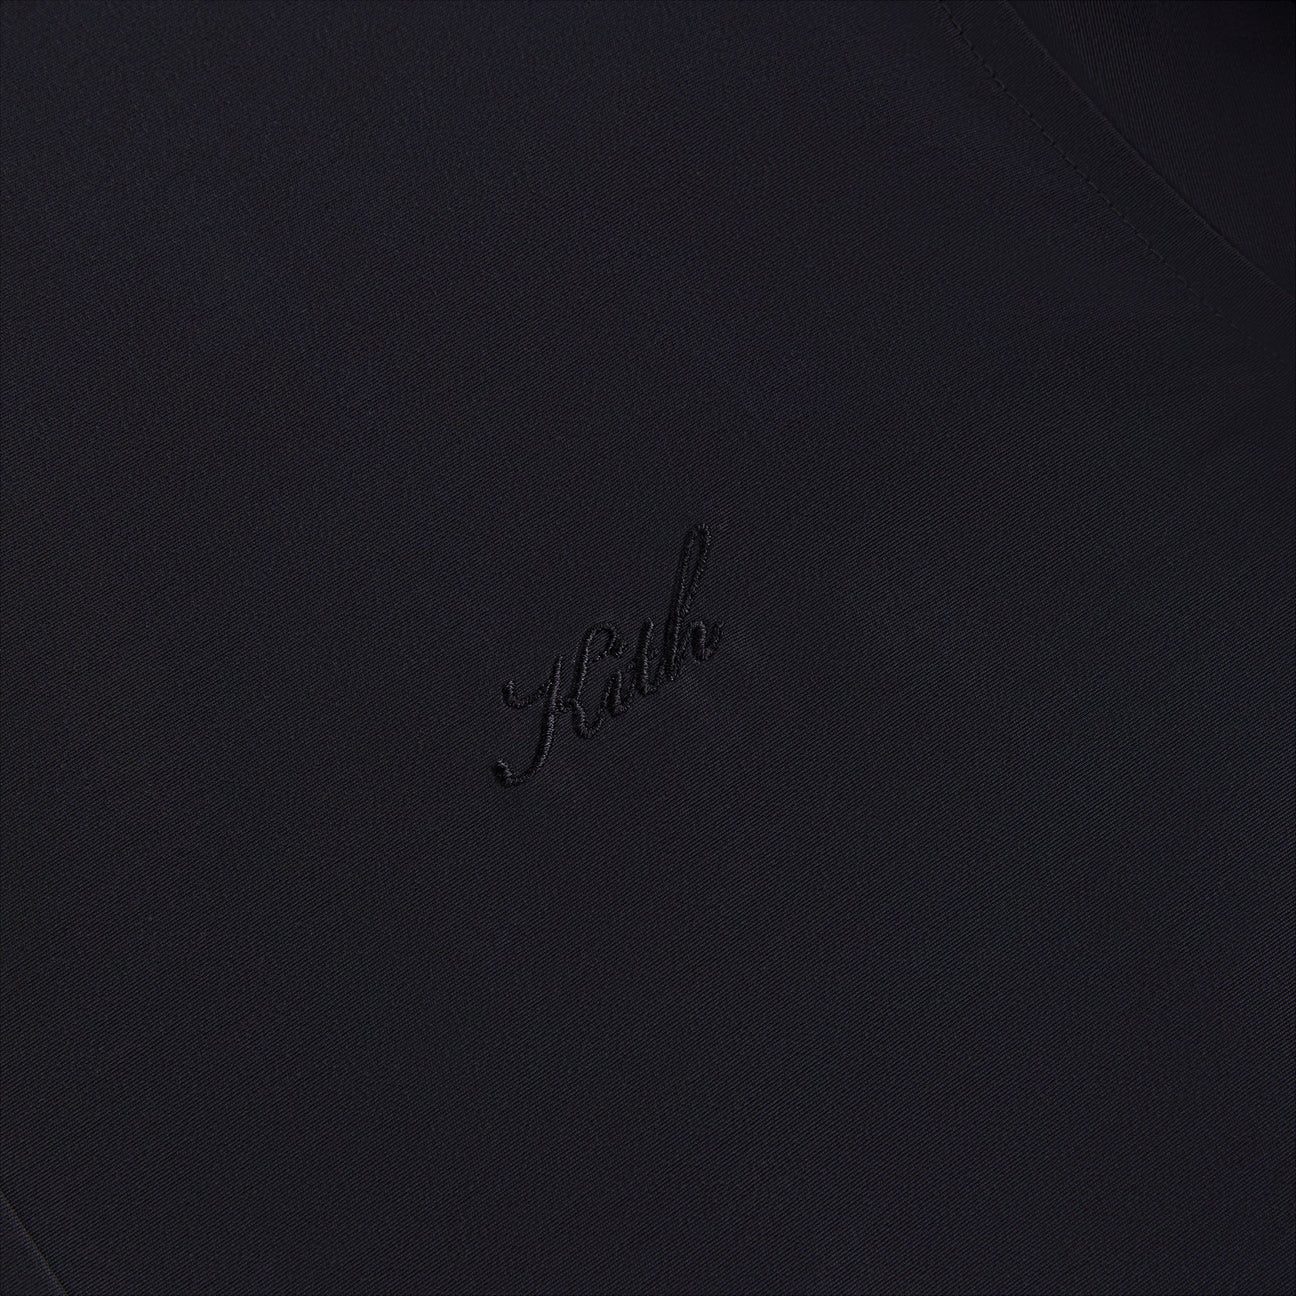 Kith - Cropped black shirt